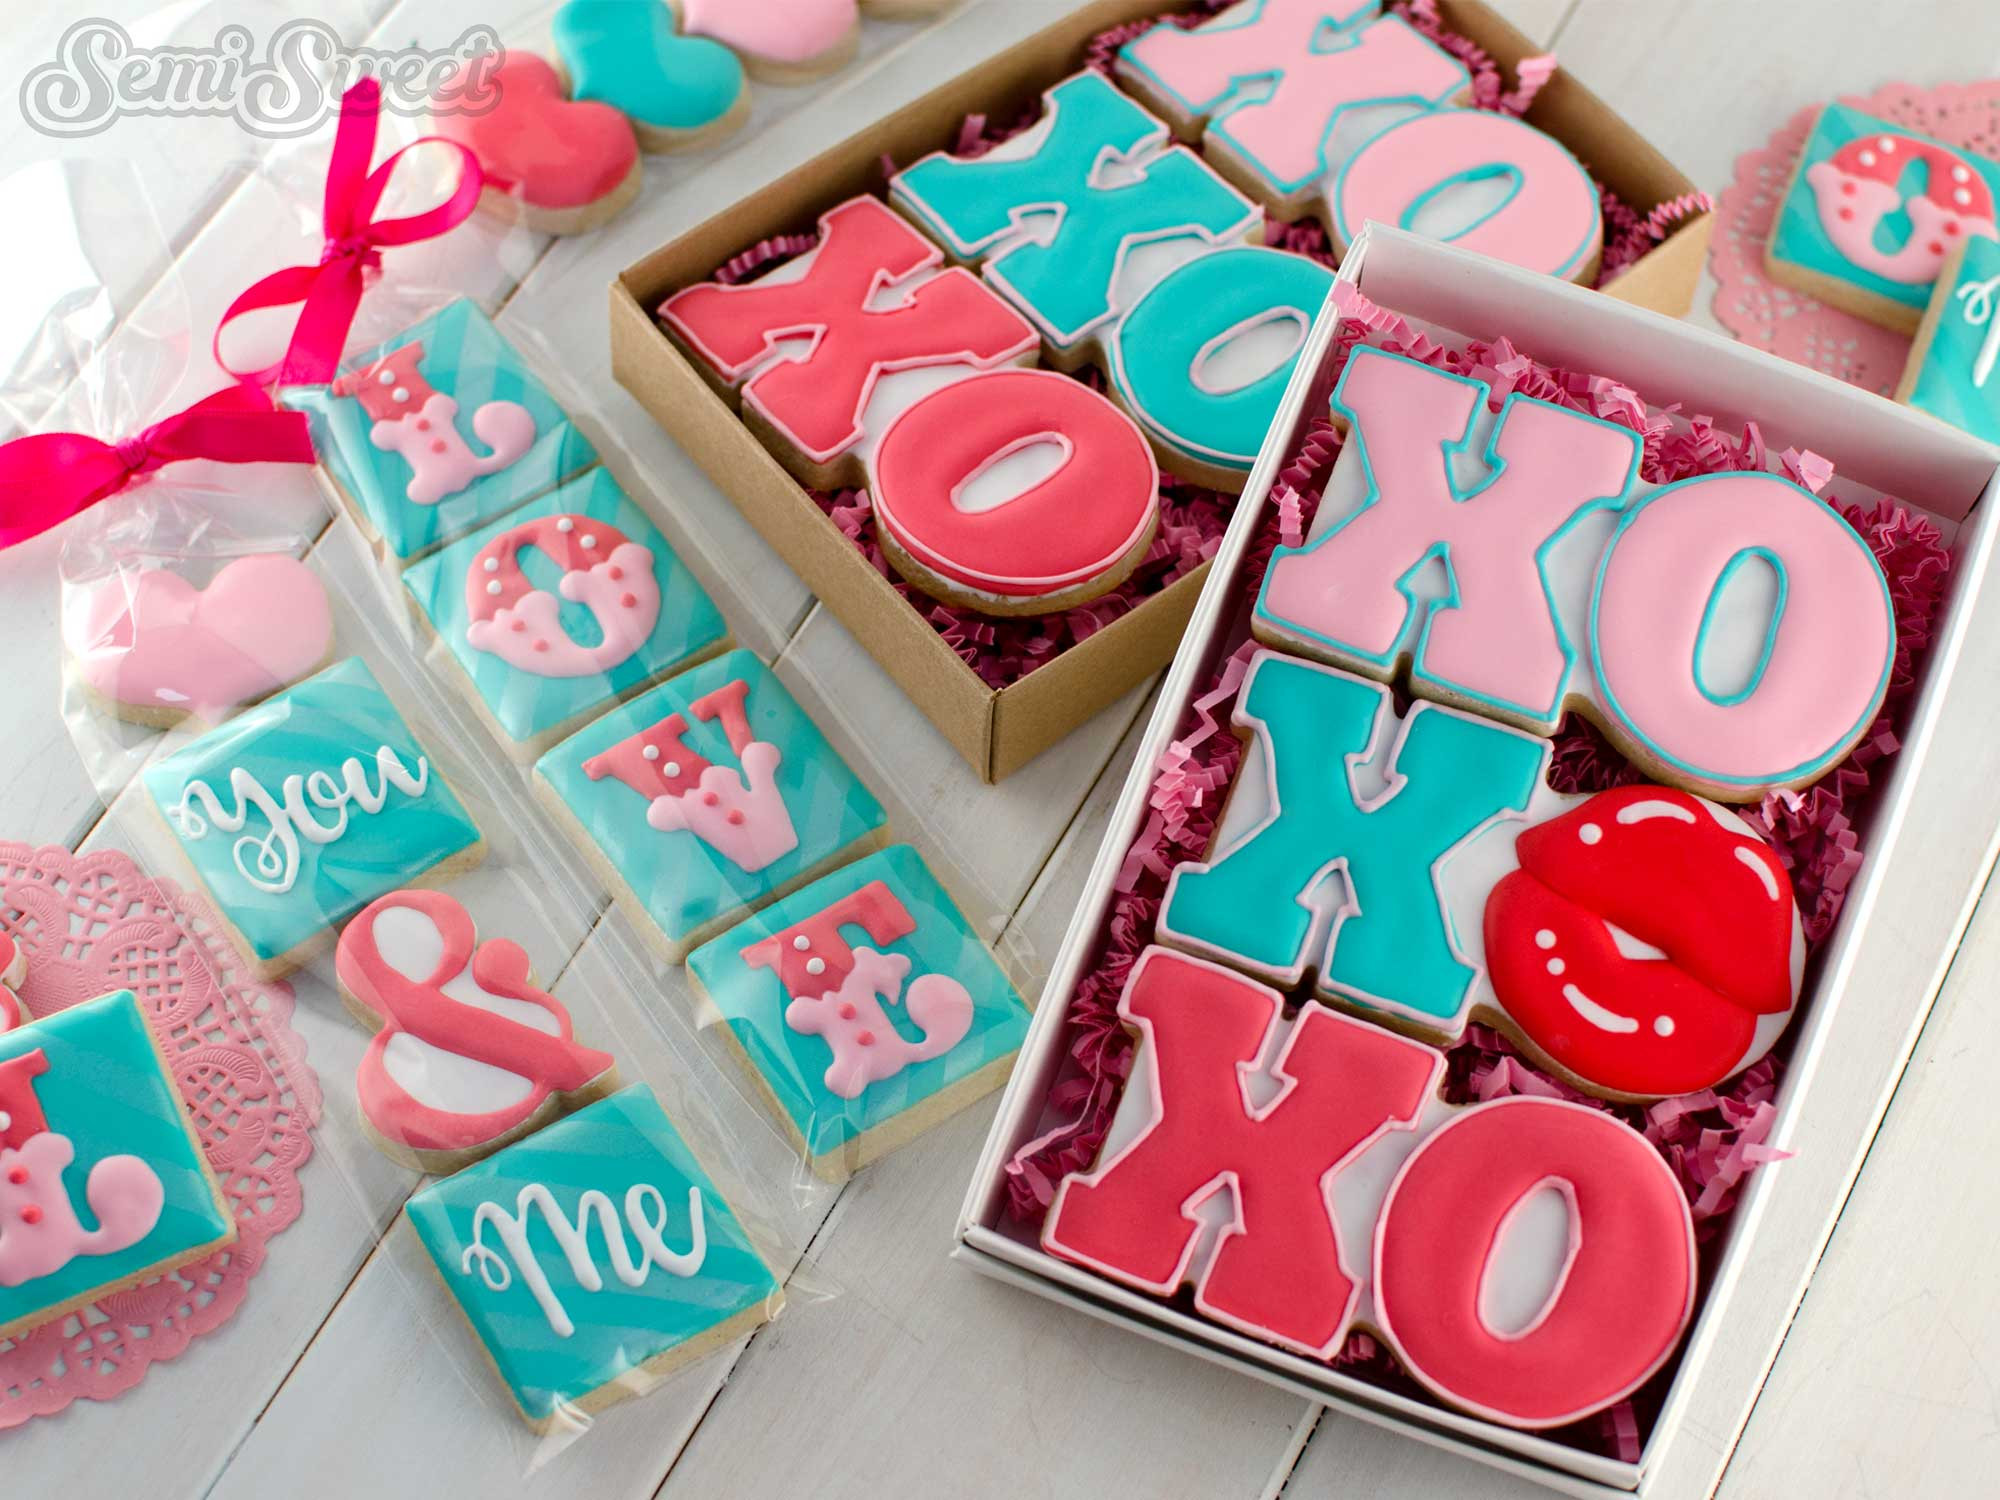 Valentine Sugar Cookies Decorating Ideas
 15 Beautifully Decorated Valentine’s Day Sugar Cookies